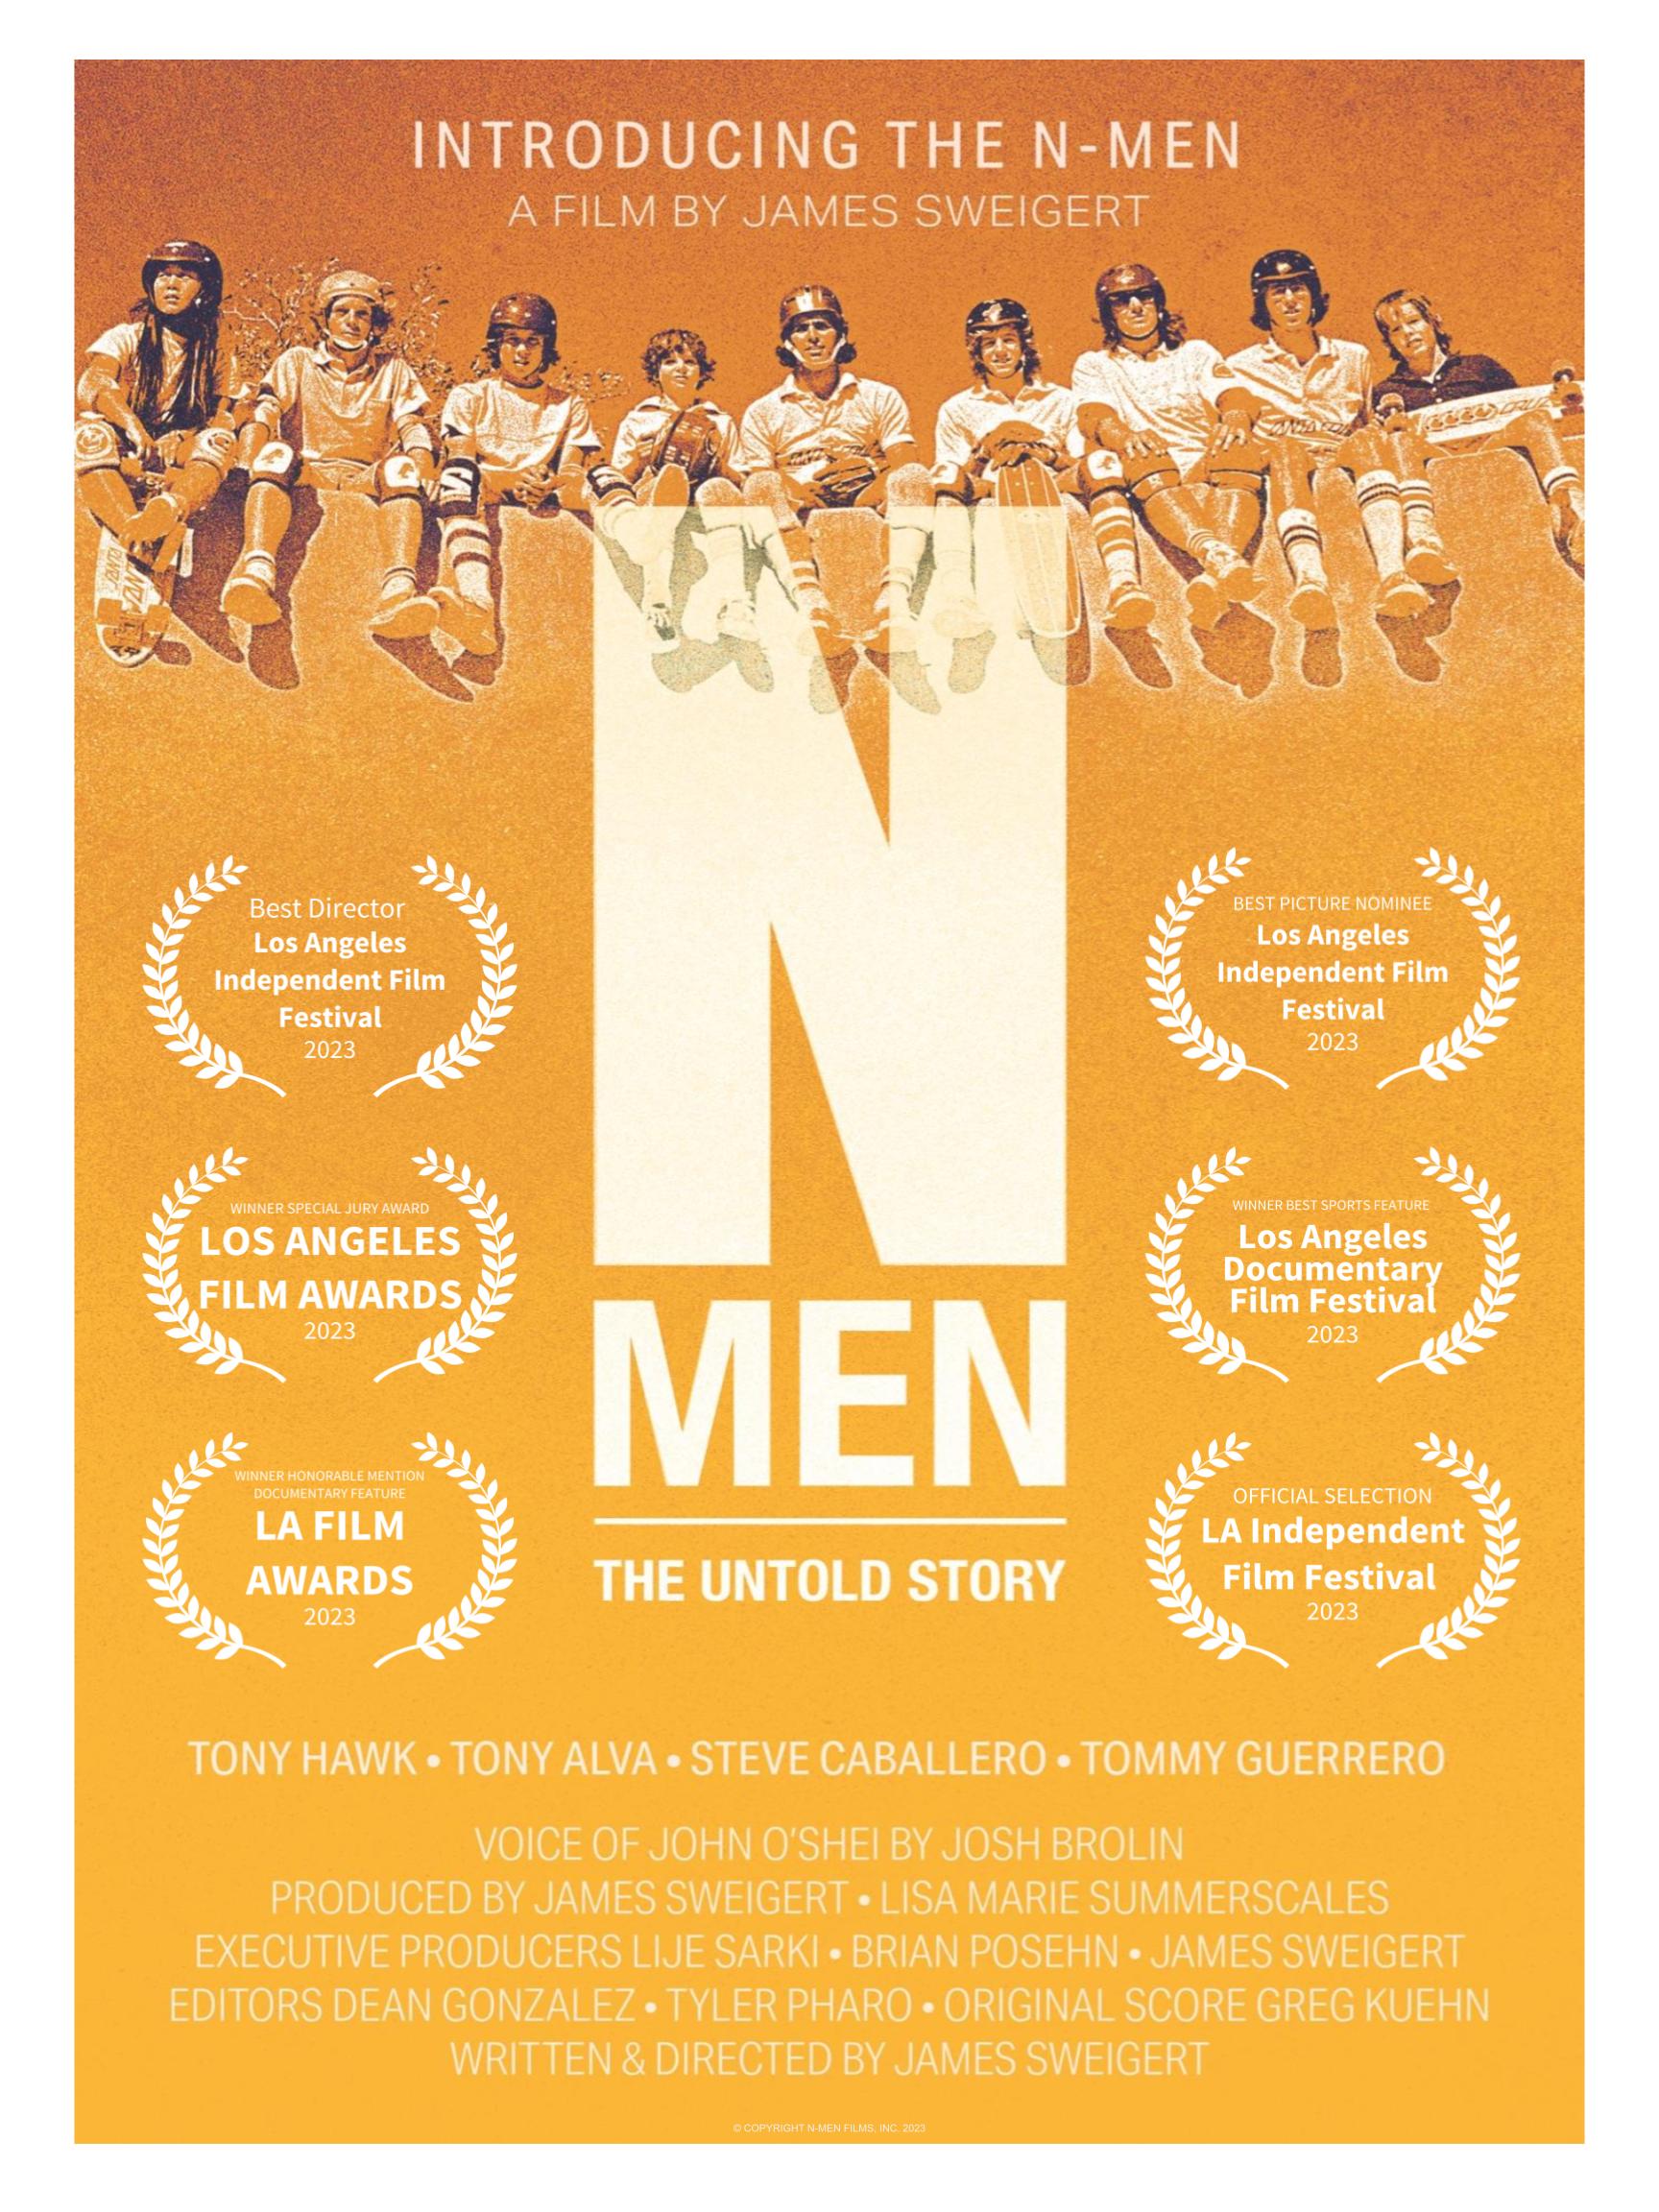 n-men the untold story